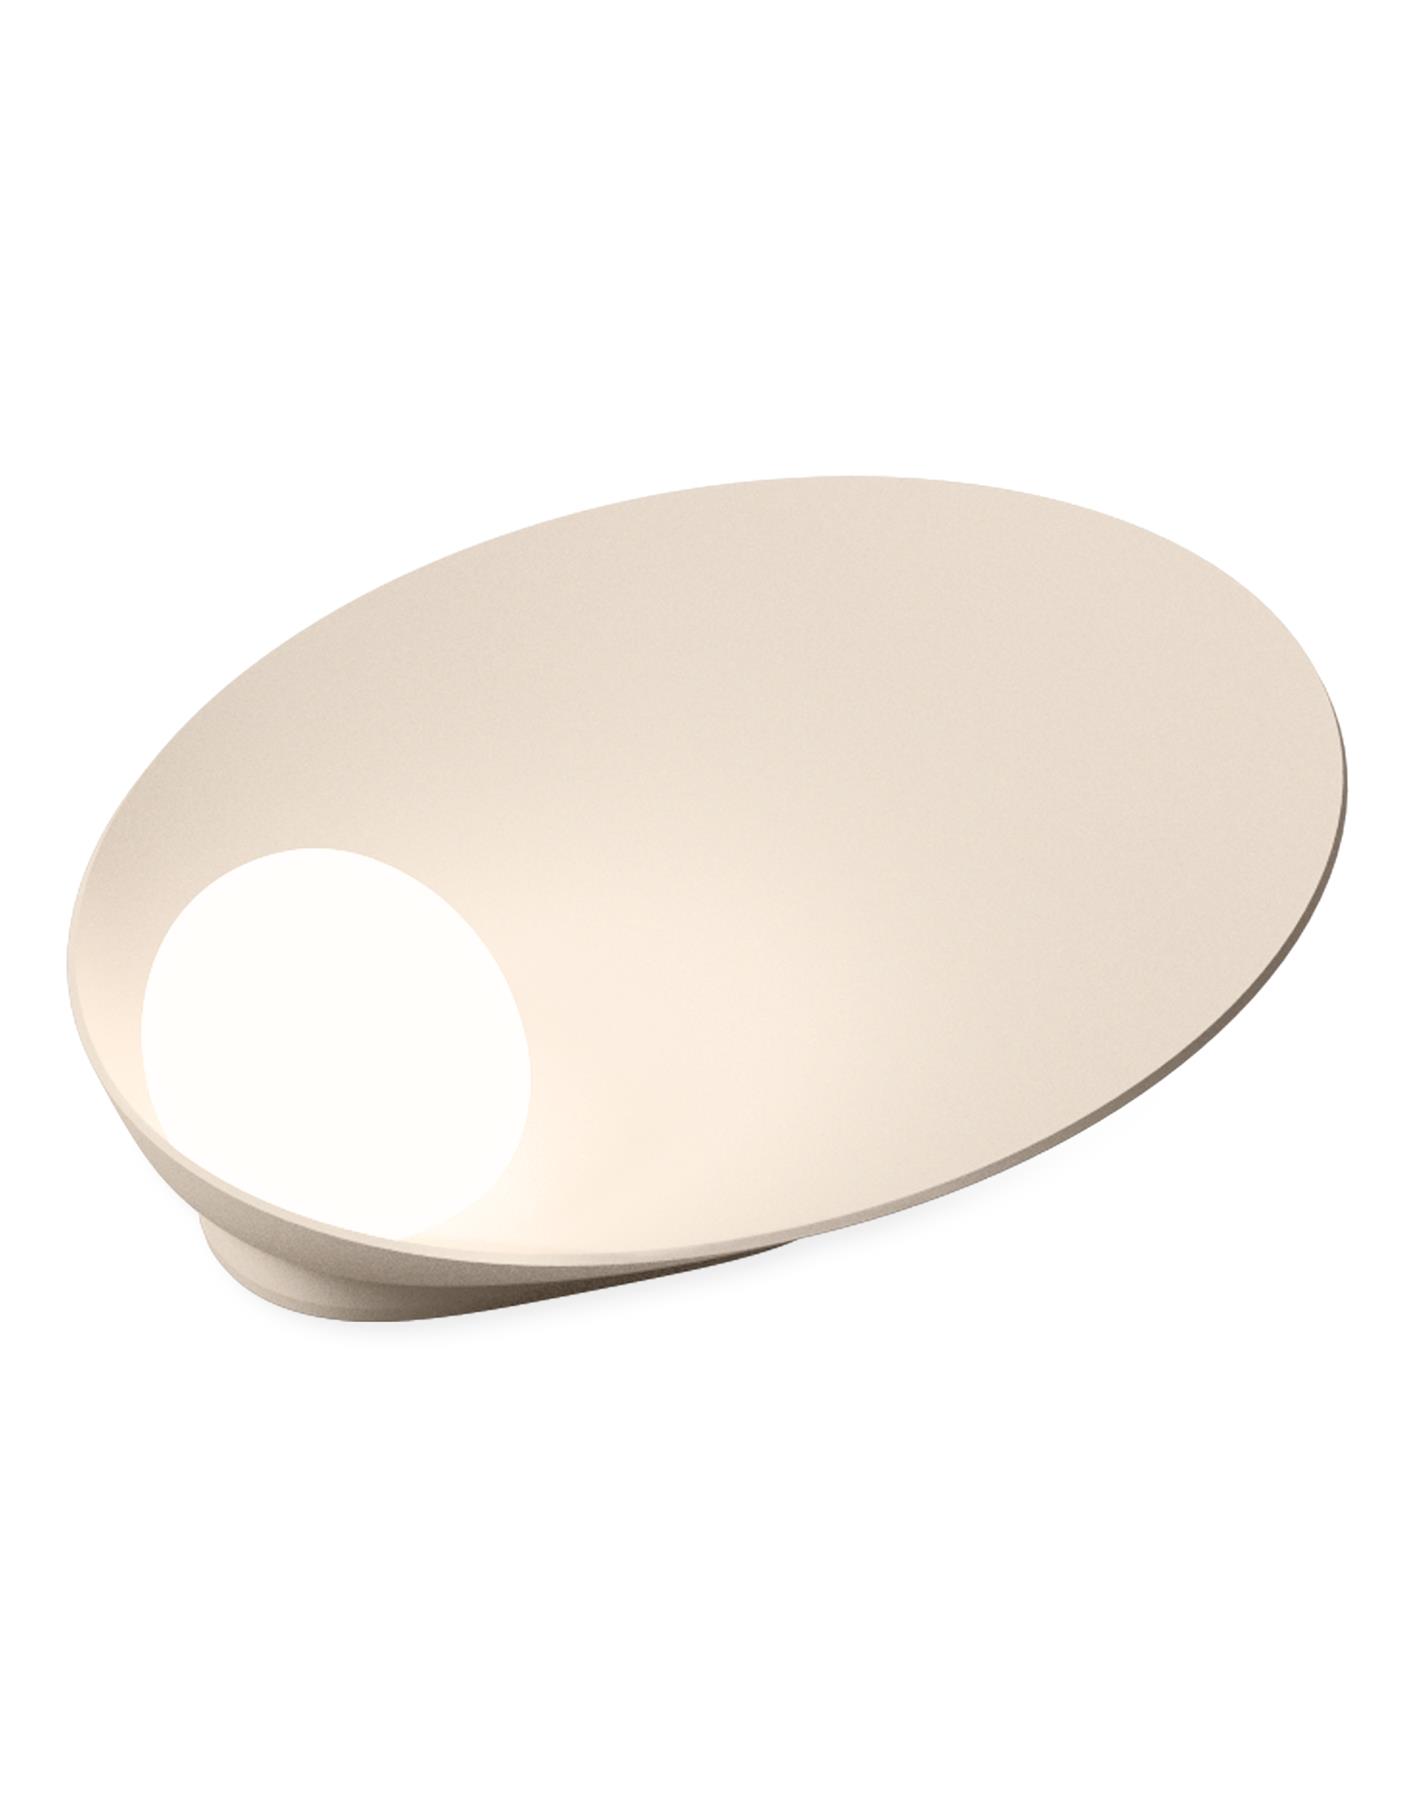 Musa Table Light 7400 White